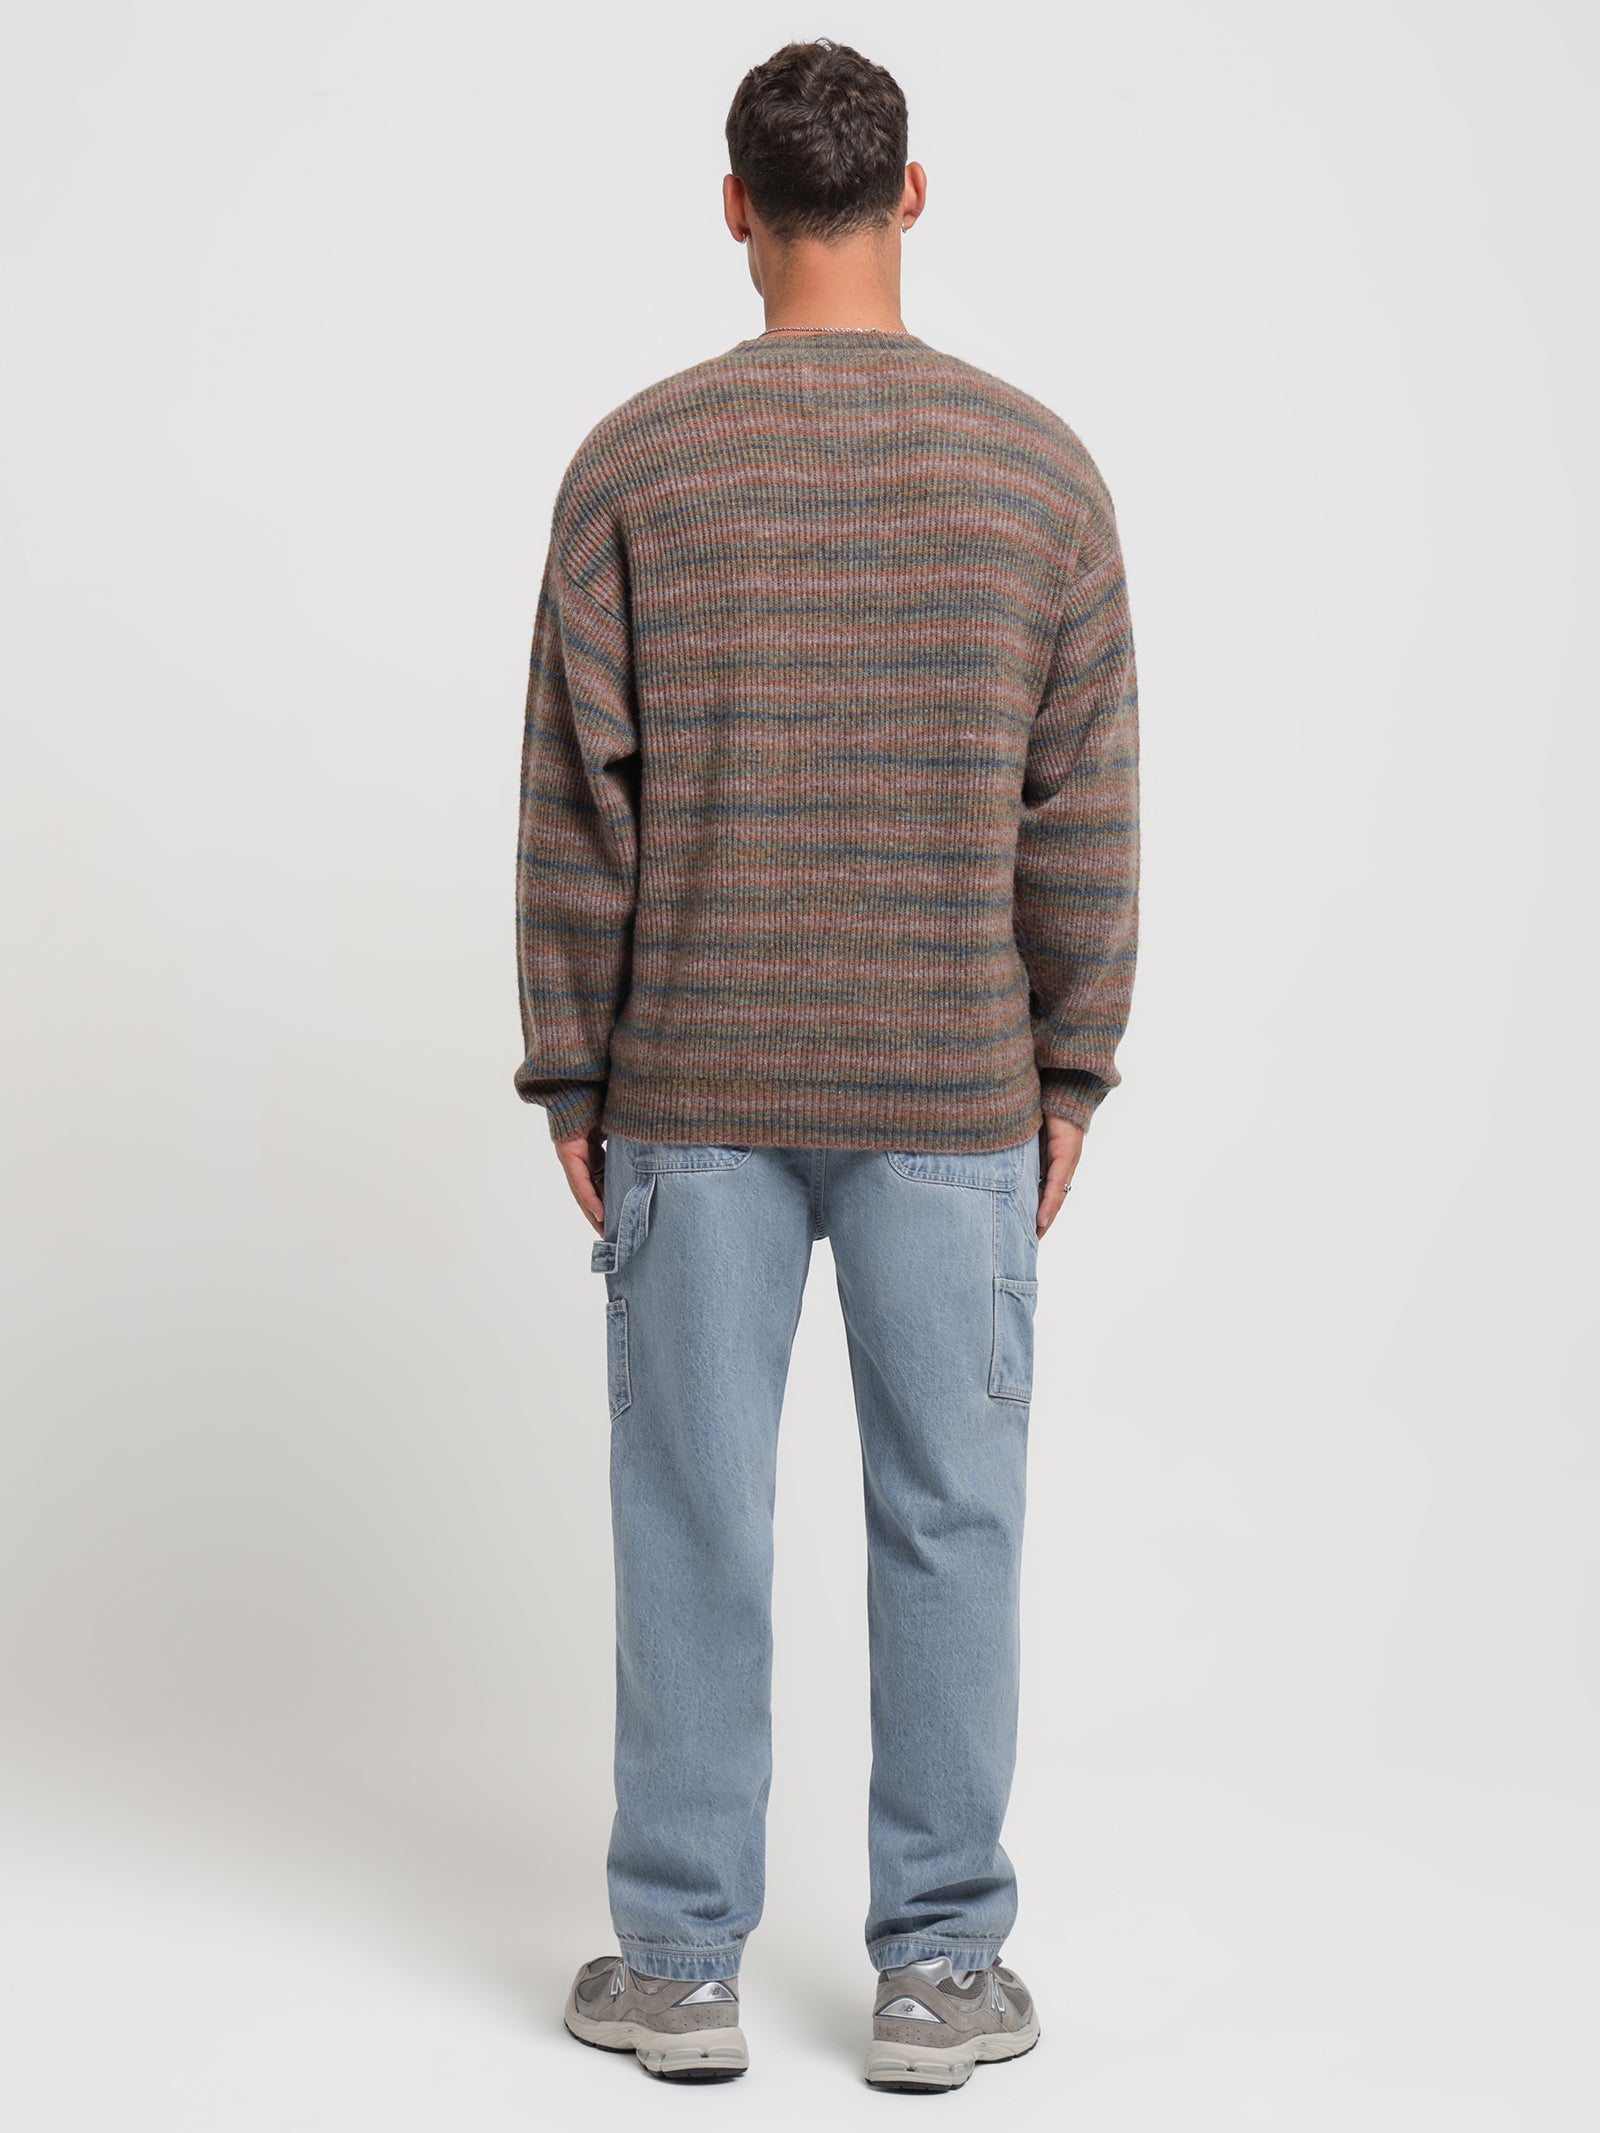 Rampage Knit Sweater in Bown & Blue Stripes